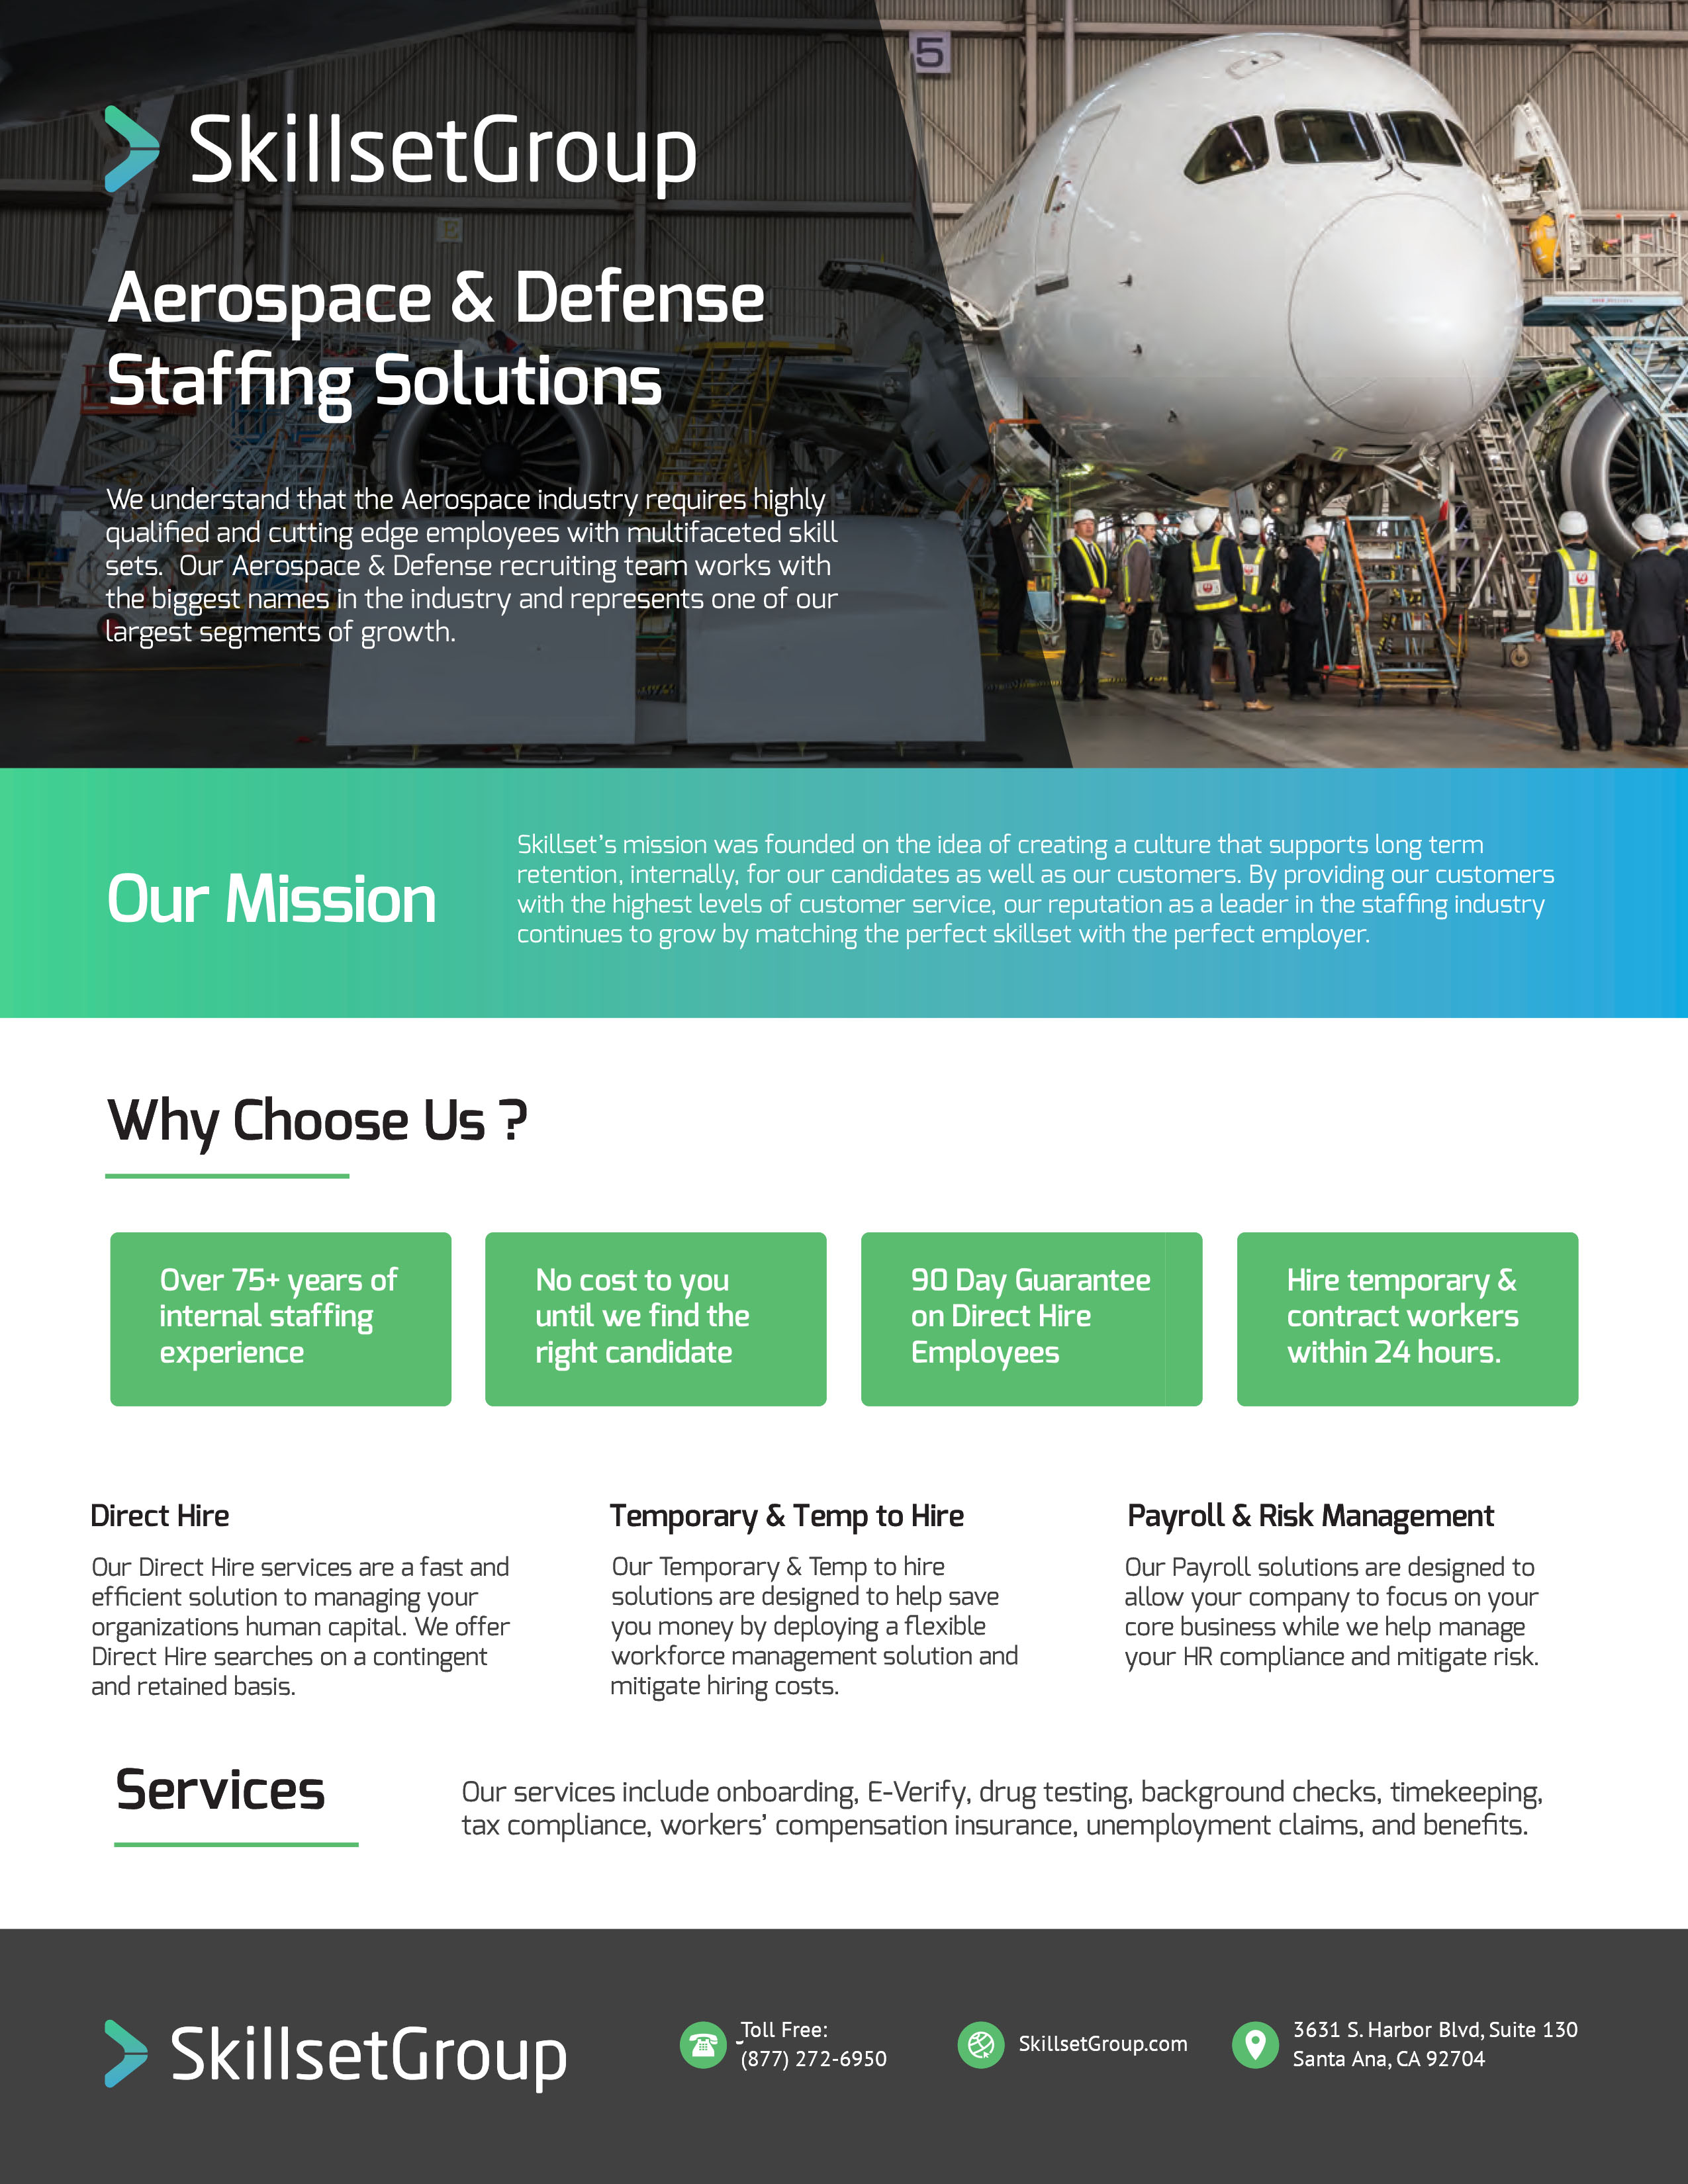 Summary of SkillsetGroup's Aerospace and Defense Staffing Services